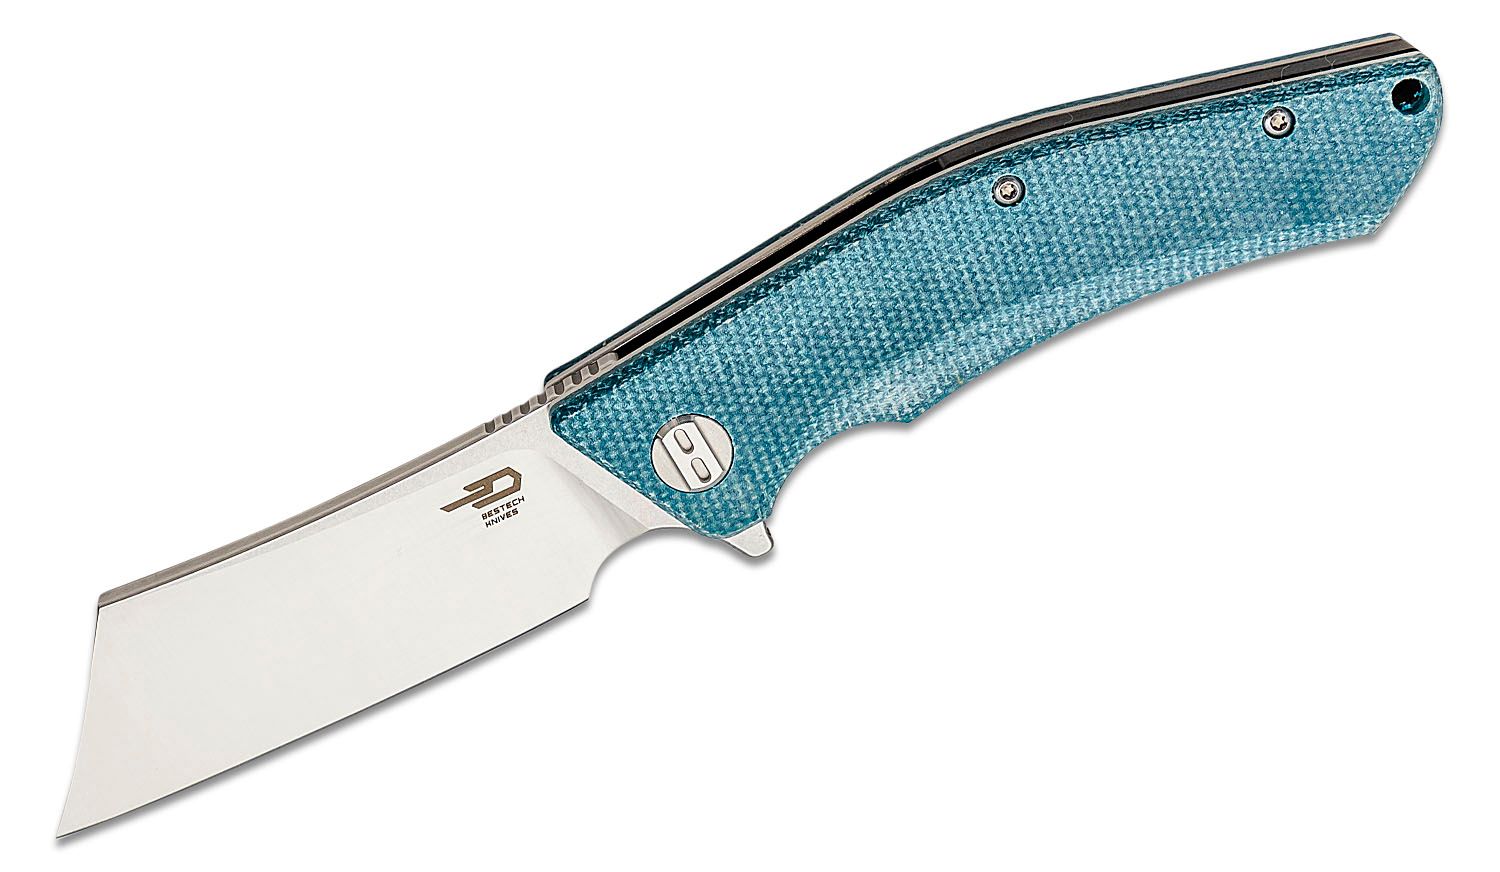 Bestech Knives BTK high quality folding and flipper knives at KnifeCenter